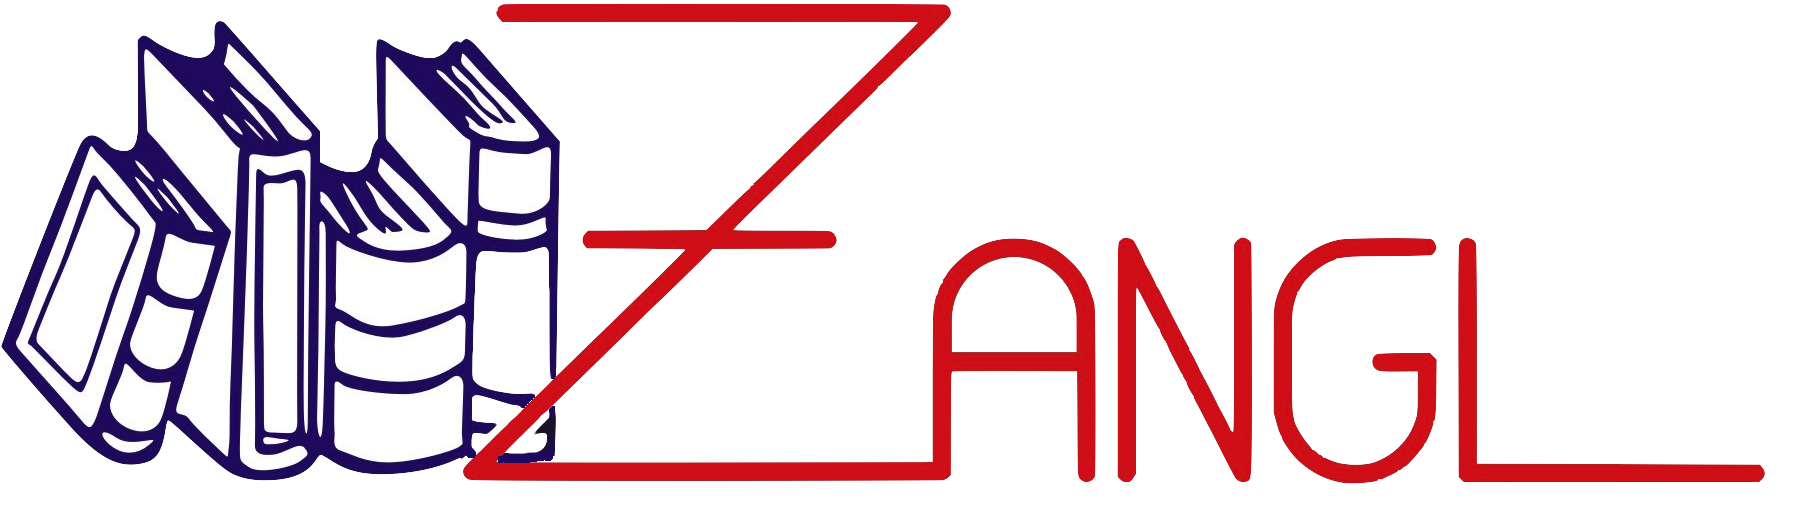 Buchhandlung Zangl Logo